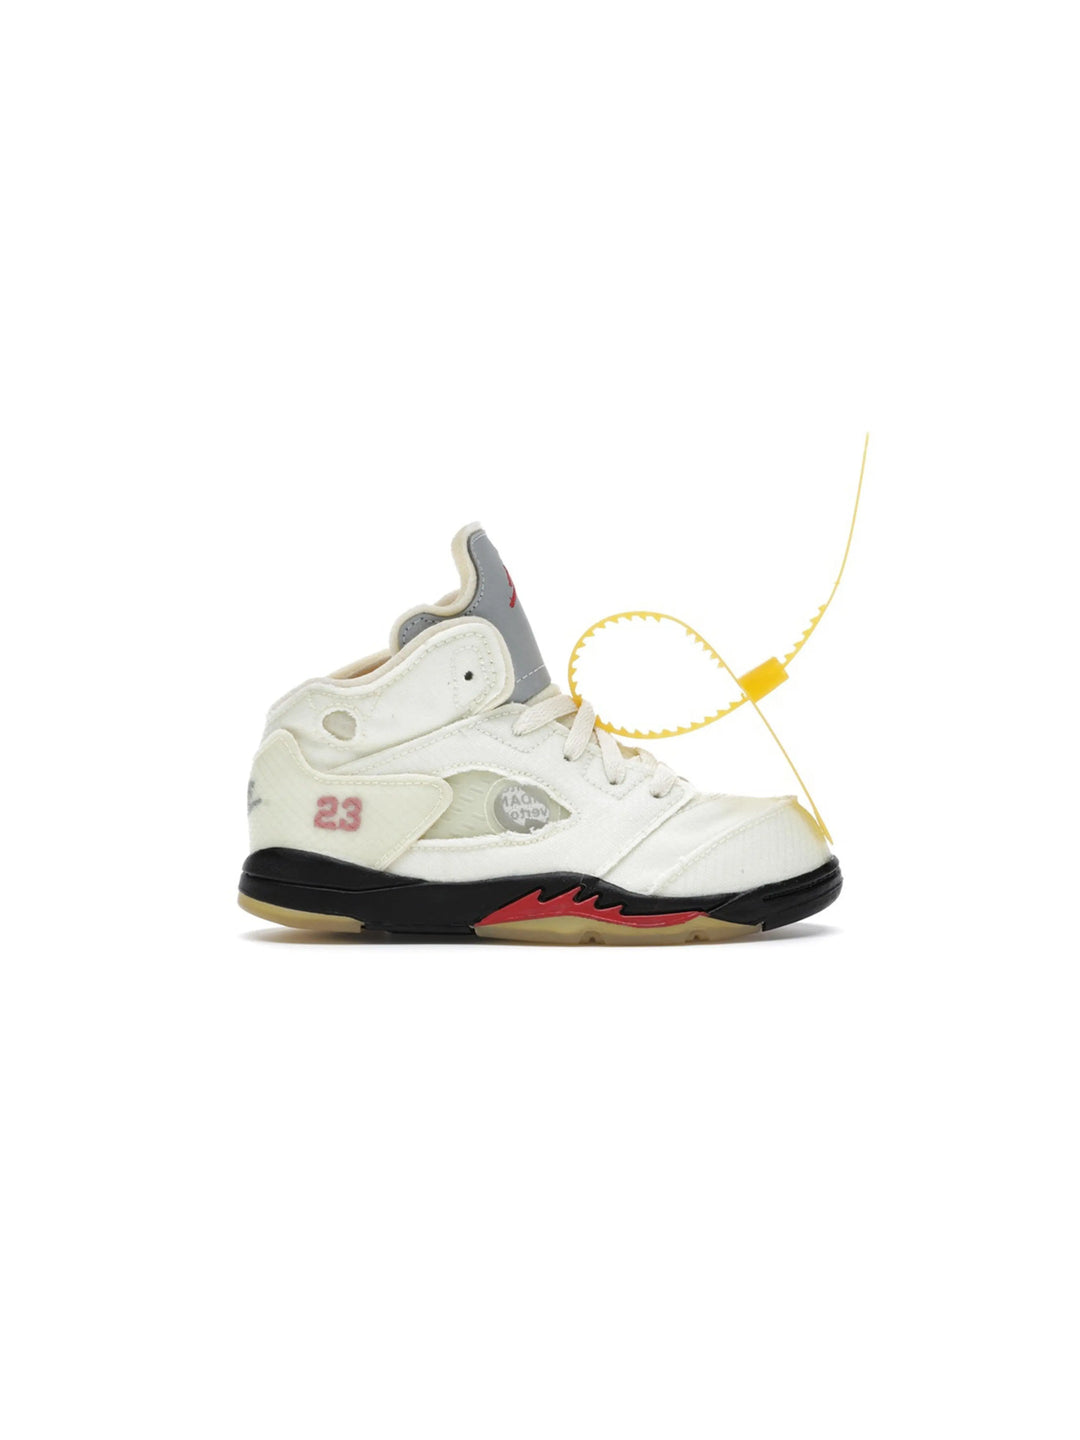 Nike Air Jordan 5 Retro OFF-WHITE Sail (TD) Jordan Brand